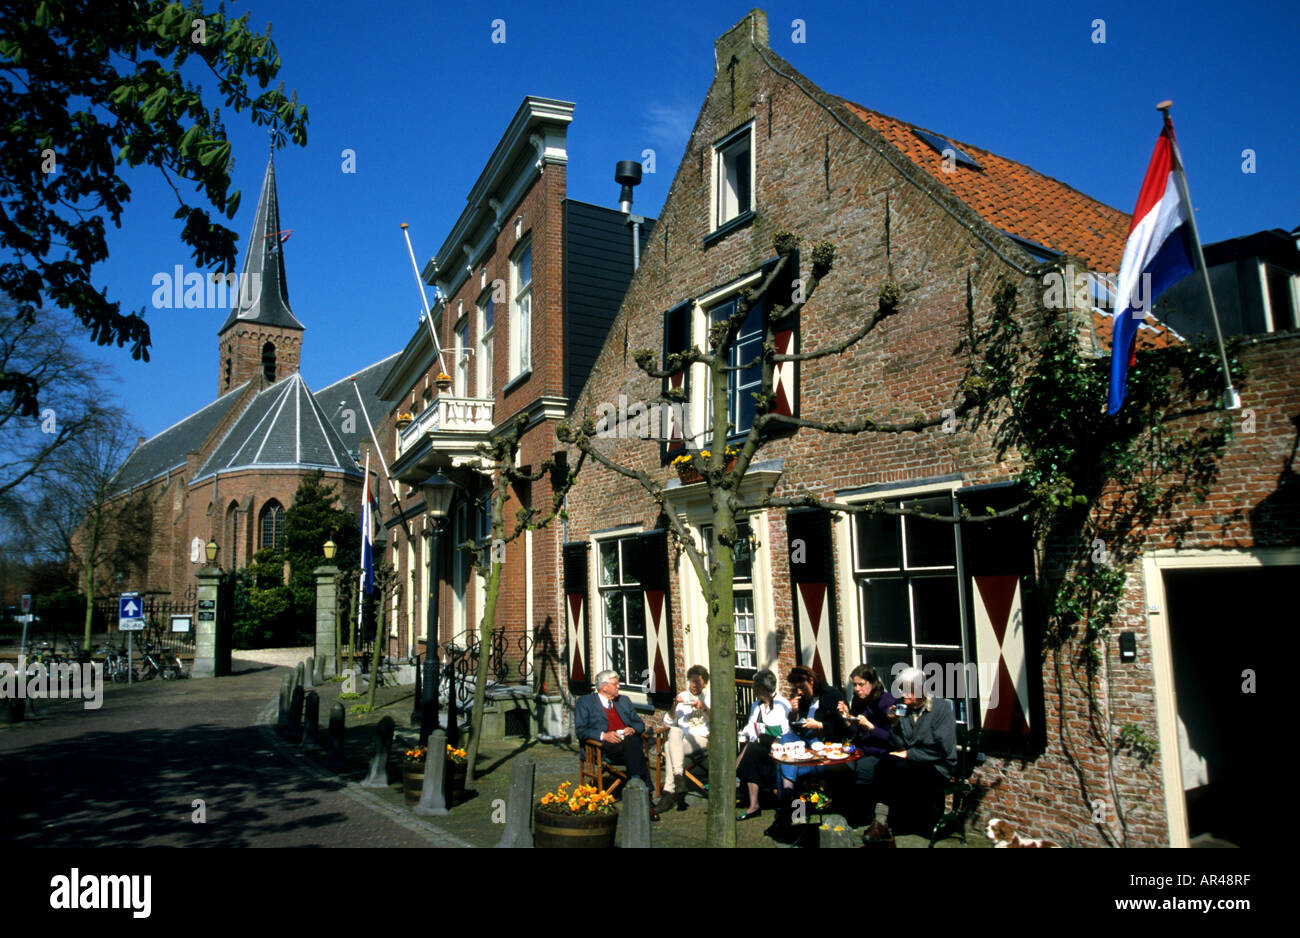 Netherlands South Holland Zuid Holland Monument Historic Architecture Wassenaar dorpstrraat restaurant bar Stock Photo